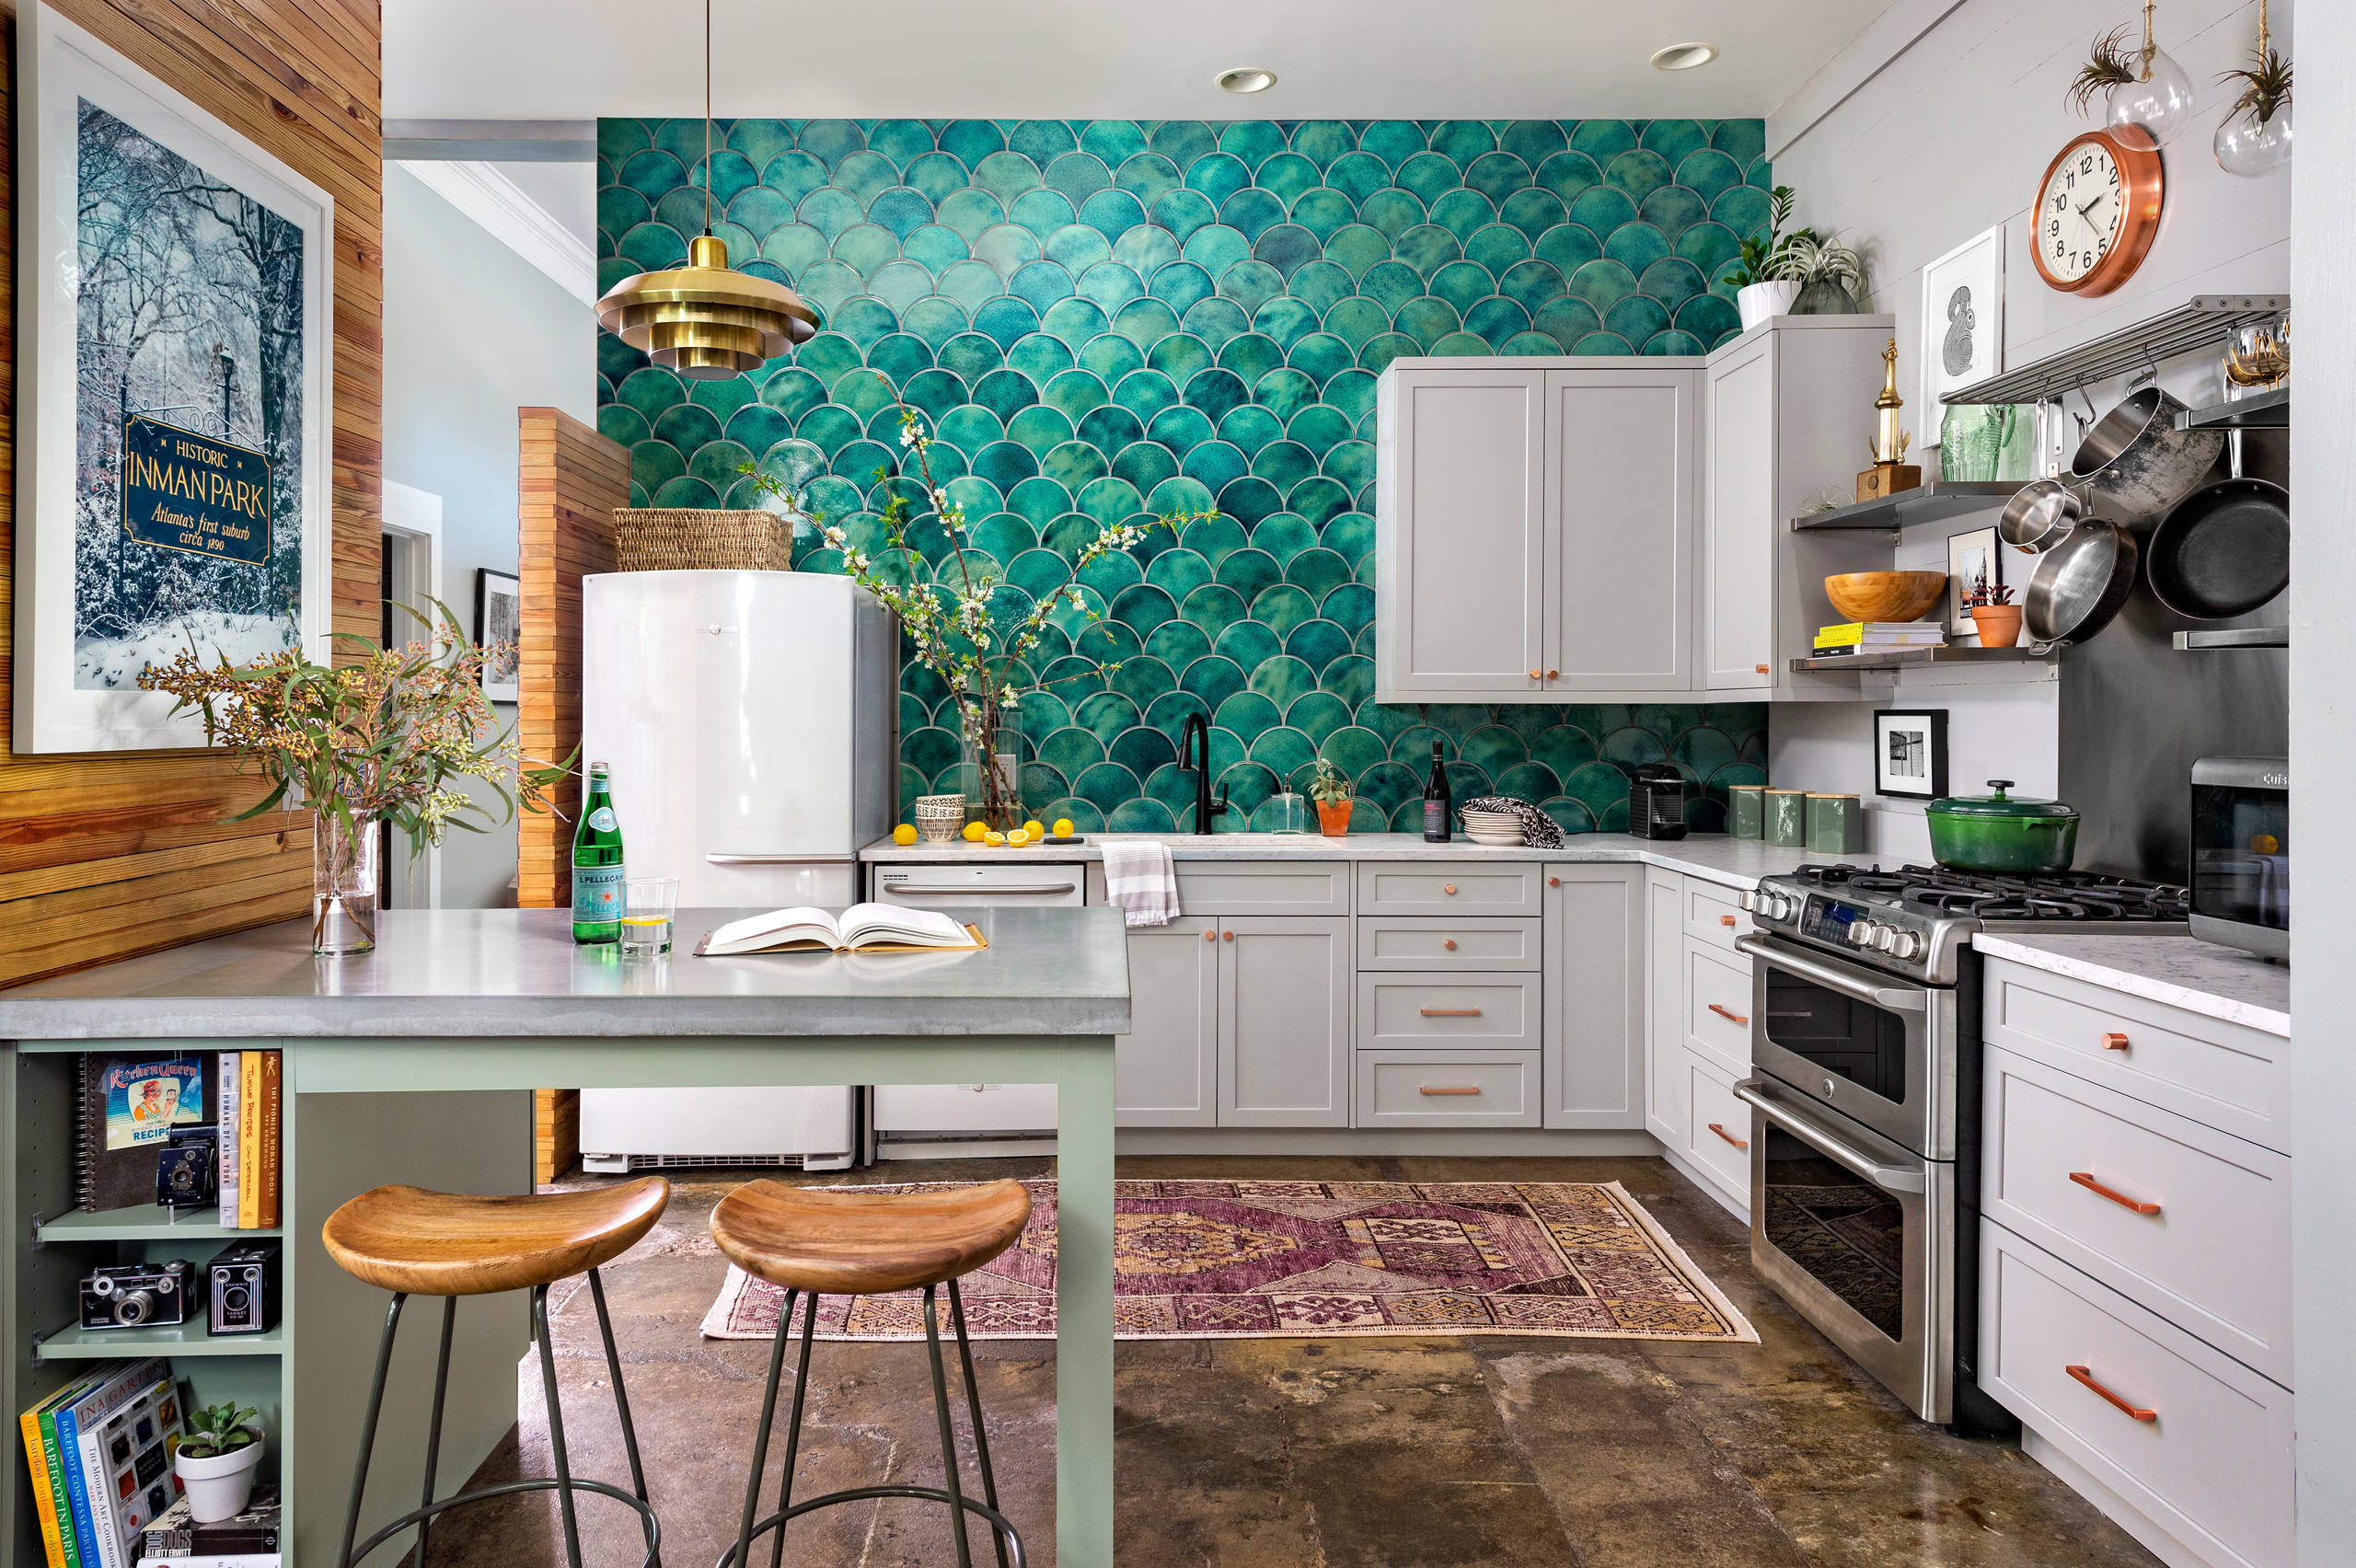 eclectic interior design kitchen